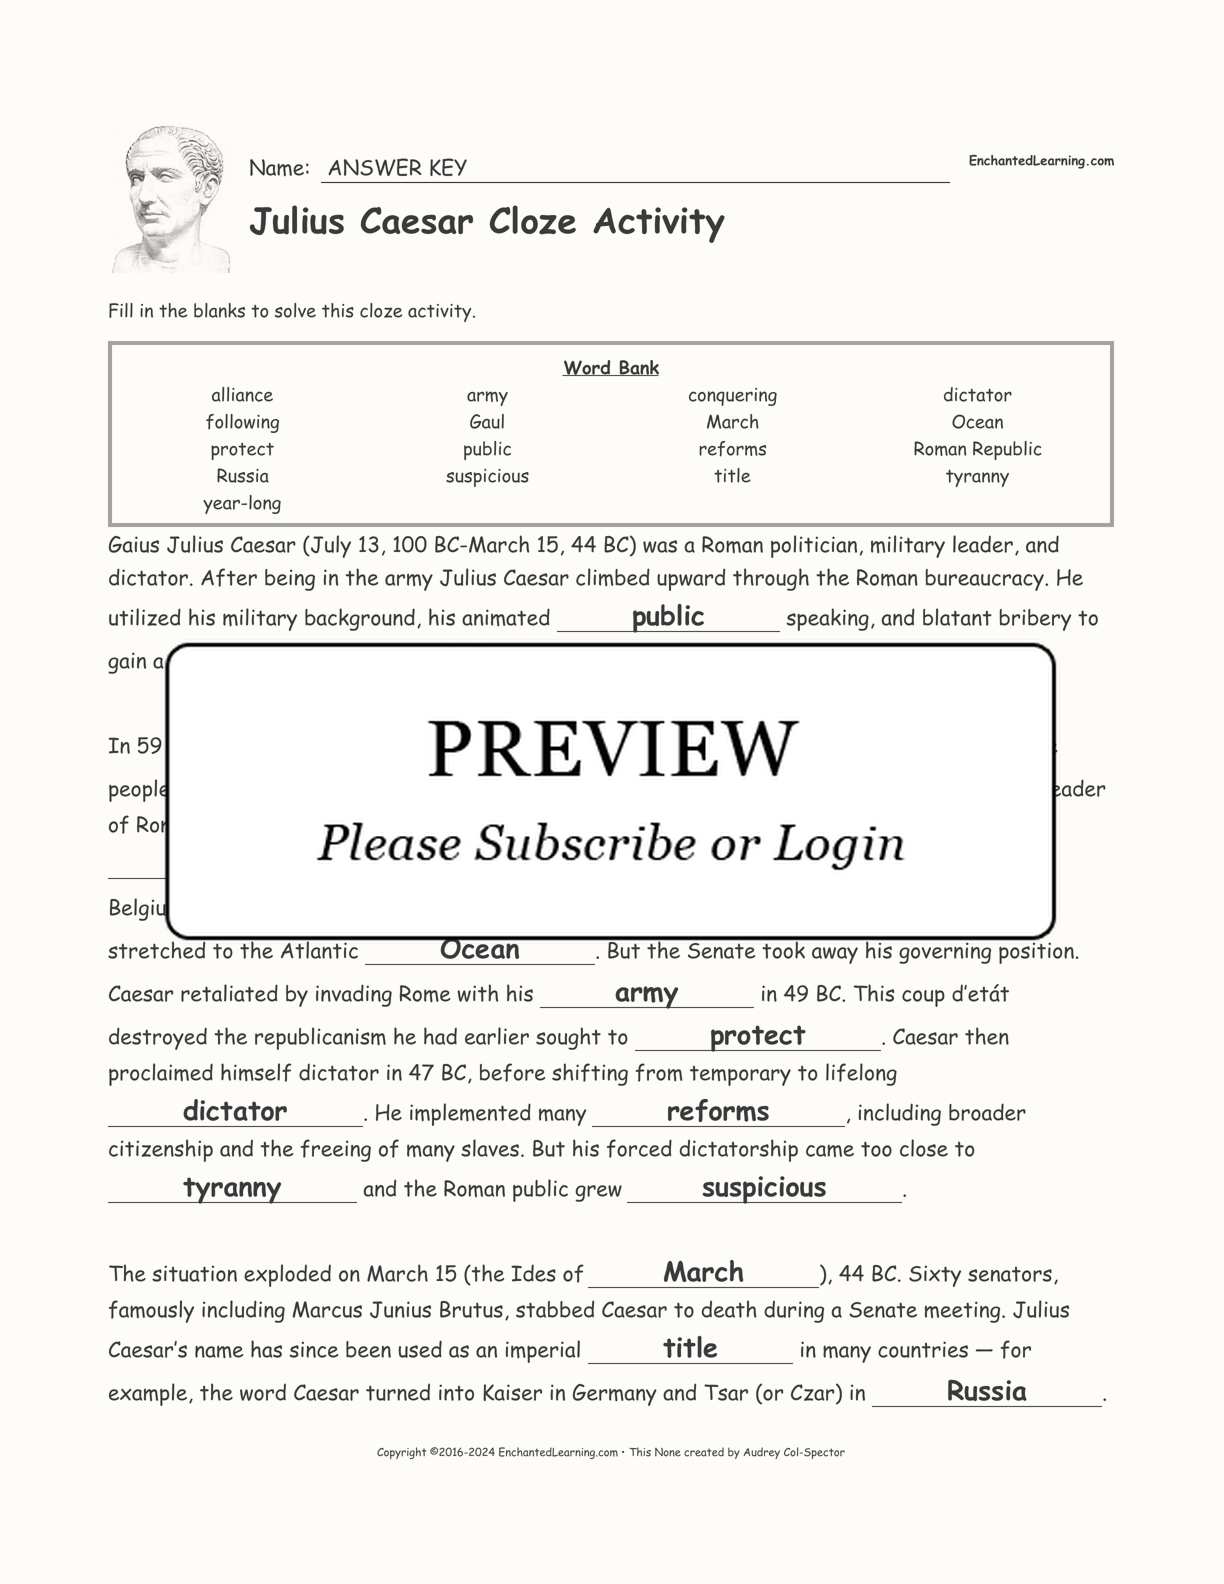 Julius Caesar Cloze Activity interactive worksheet page 2